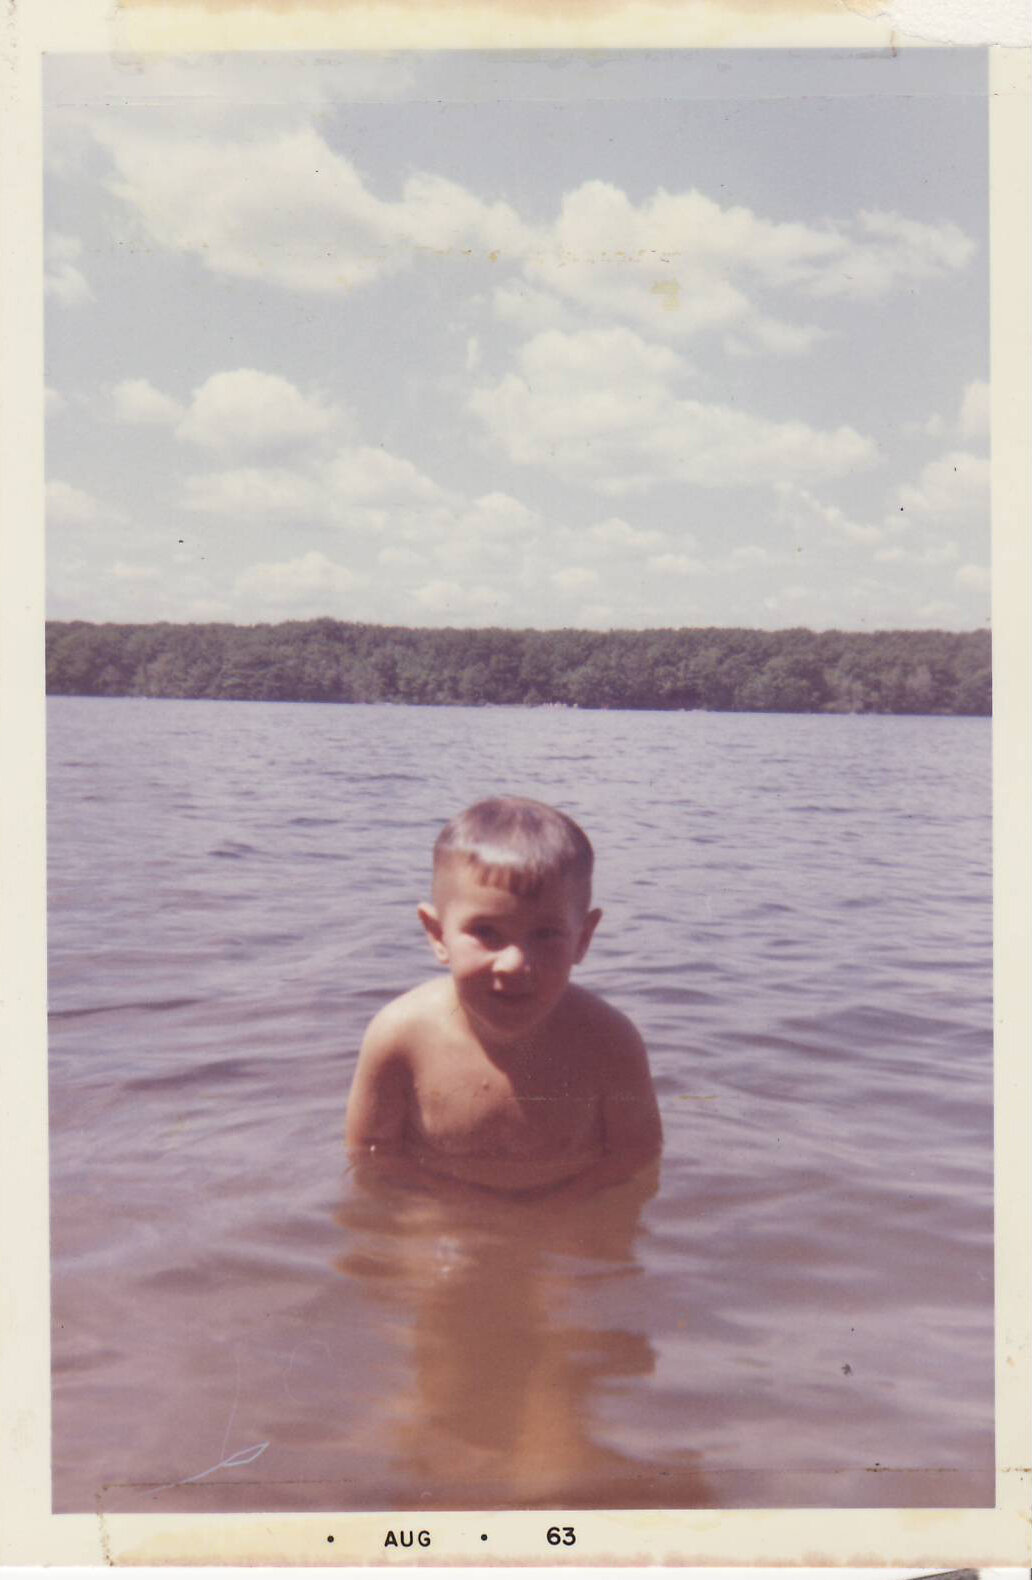 Steve LeClaire, swimming, 1963